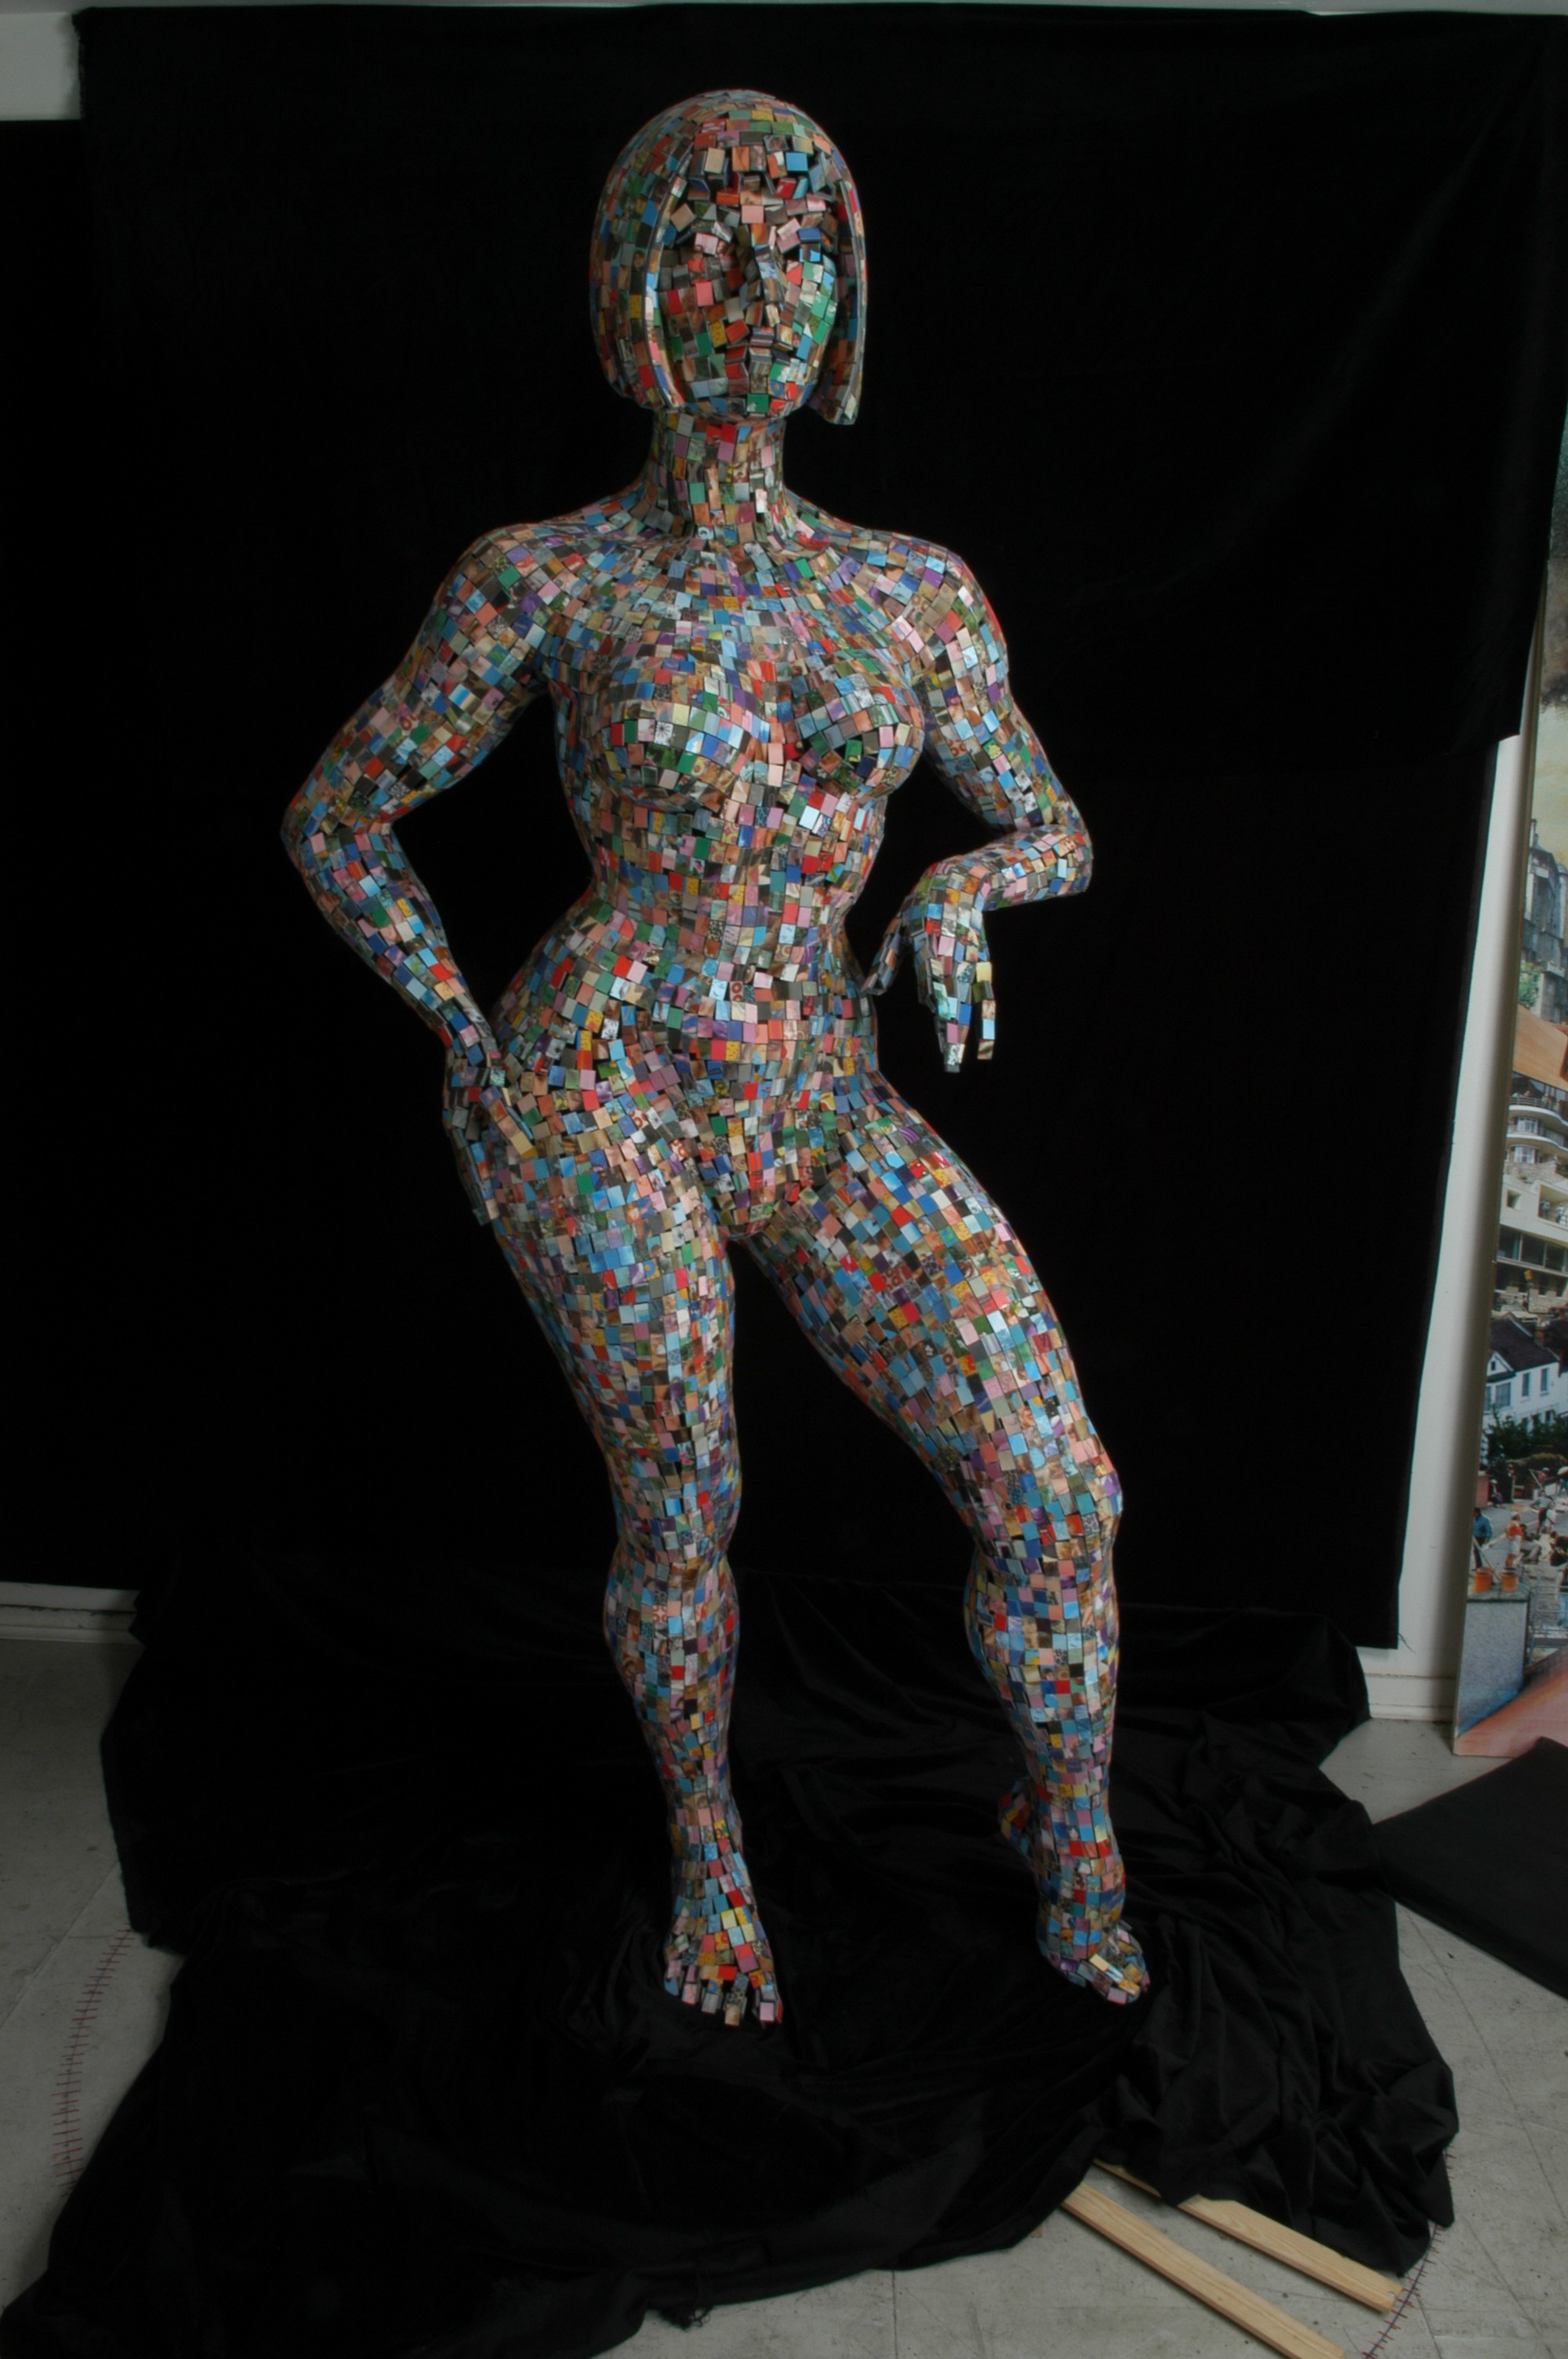 a photo of David Mach's biowoman sculpture